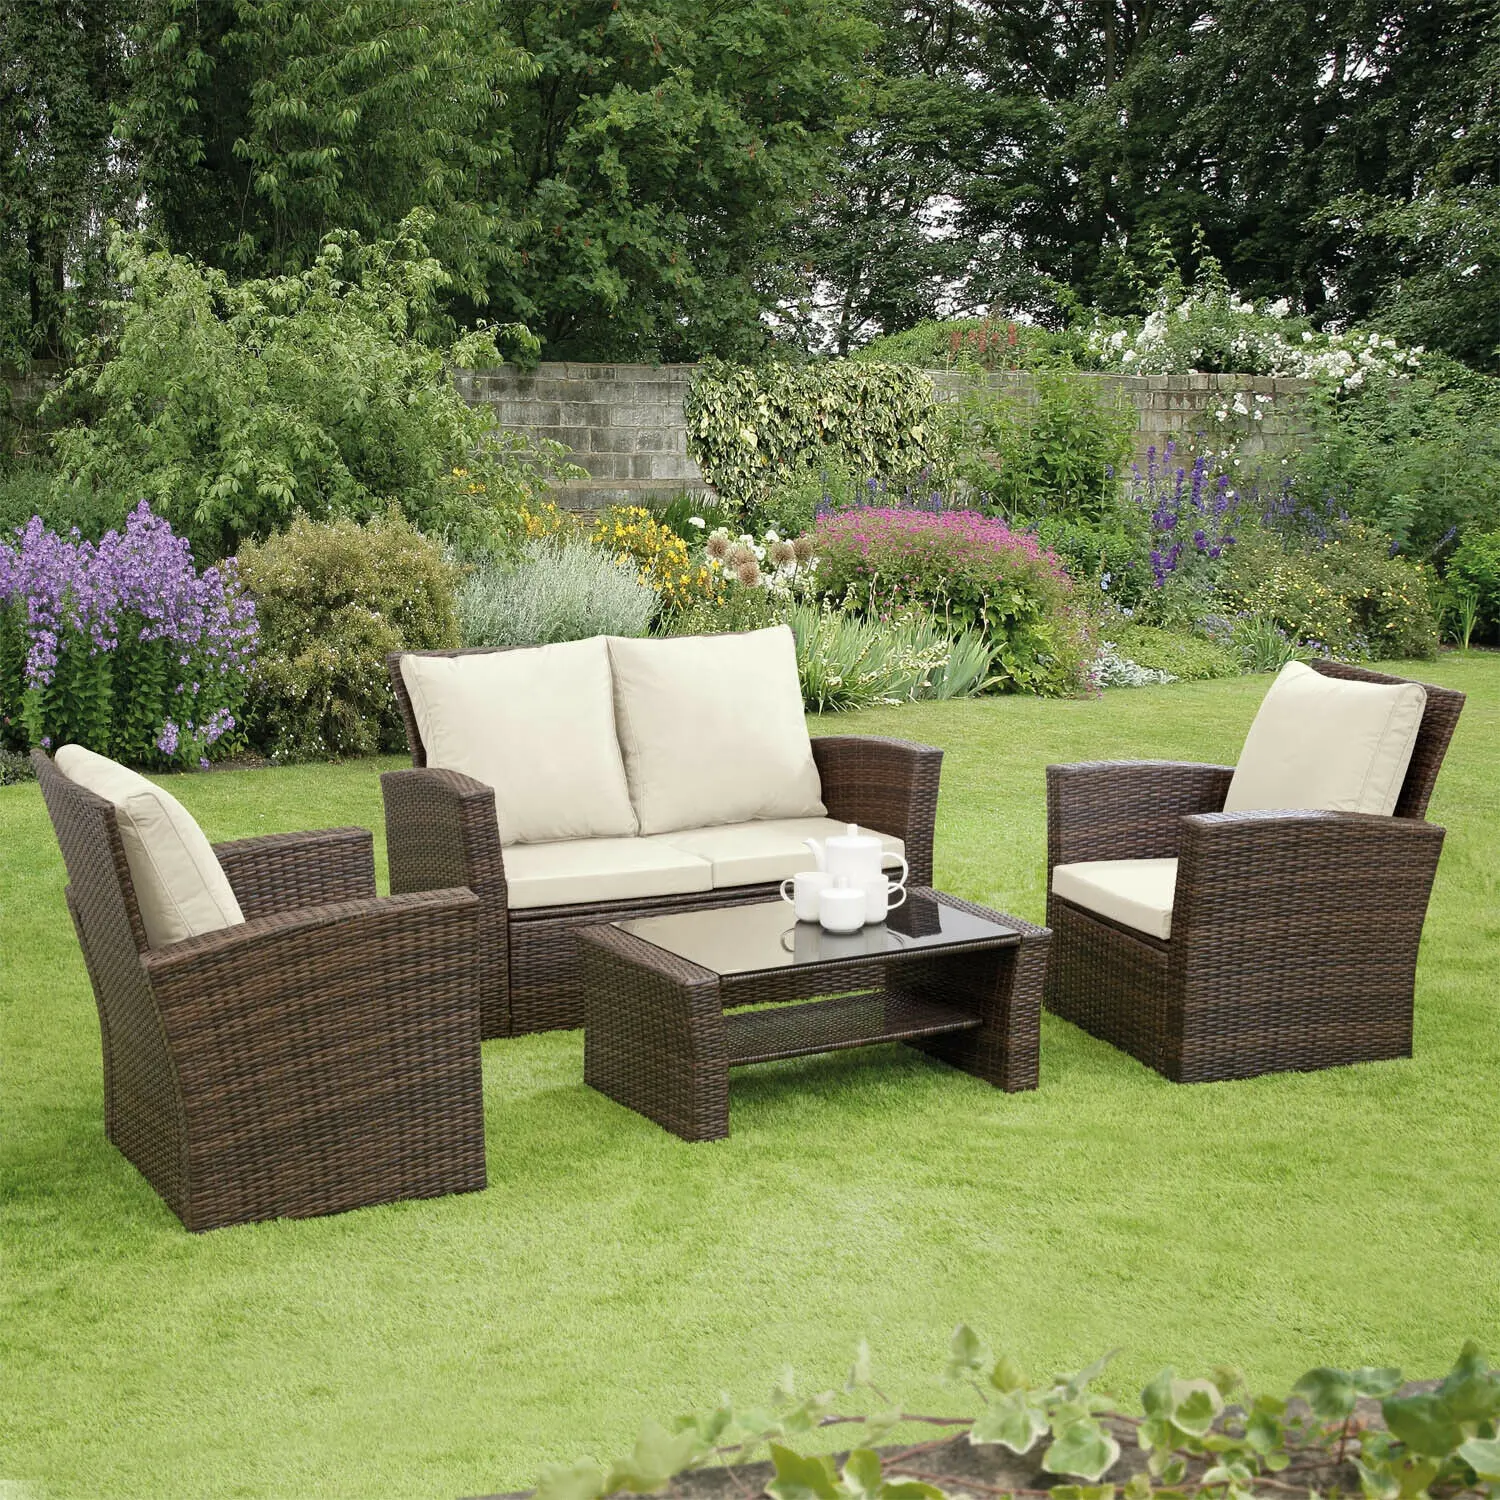 2020 Top sales Rattan Garden Furniture Sofa Wicker Weave 4 Seater Patio Conservatory set